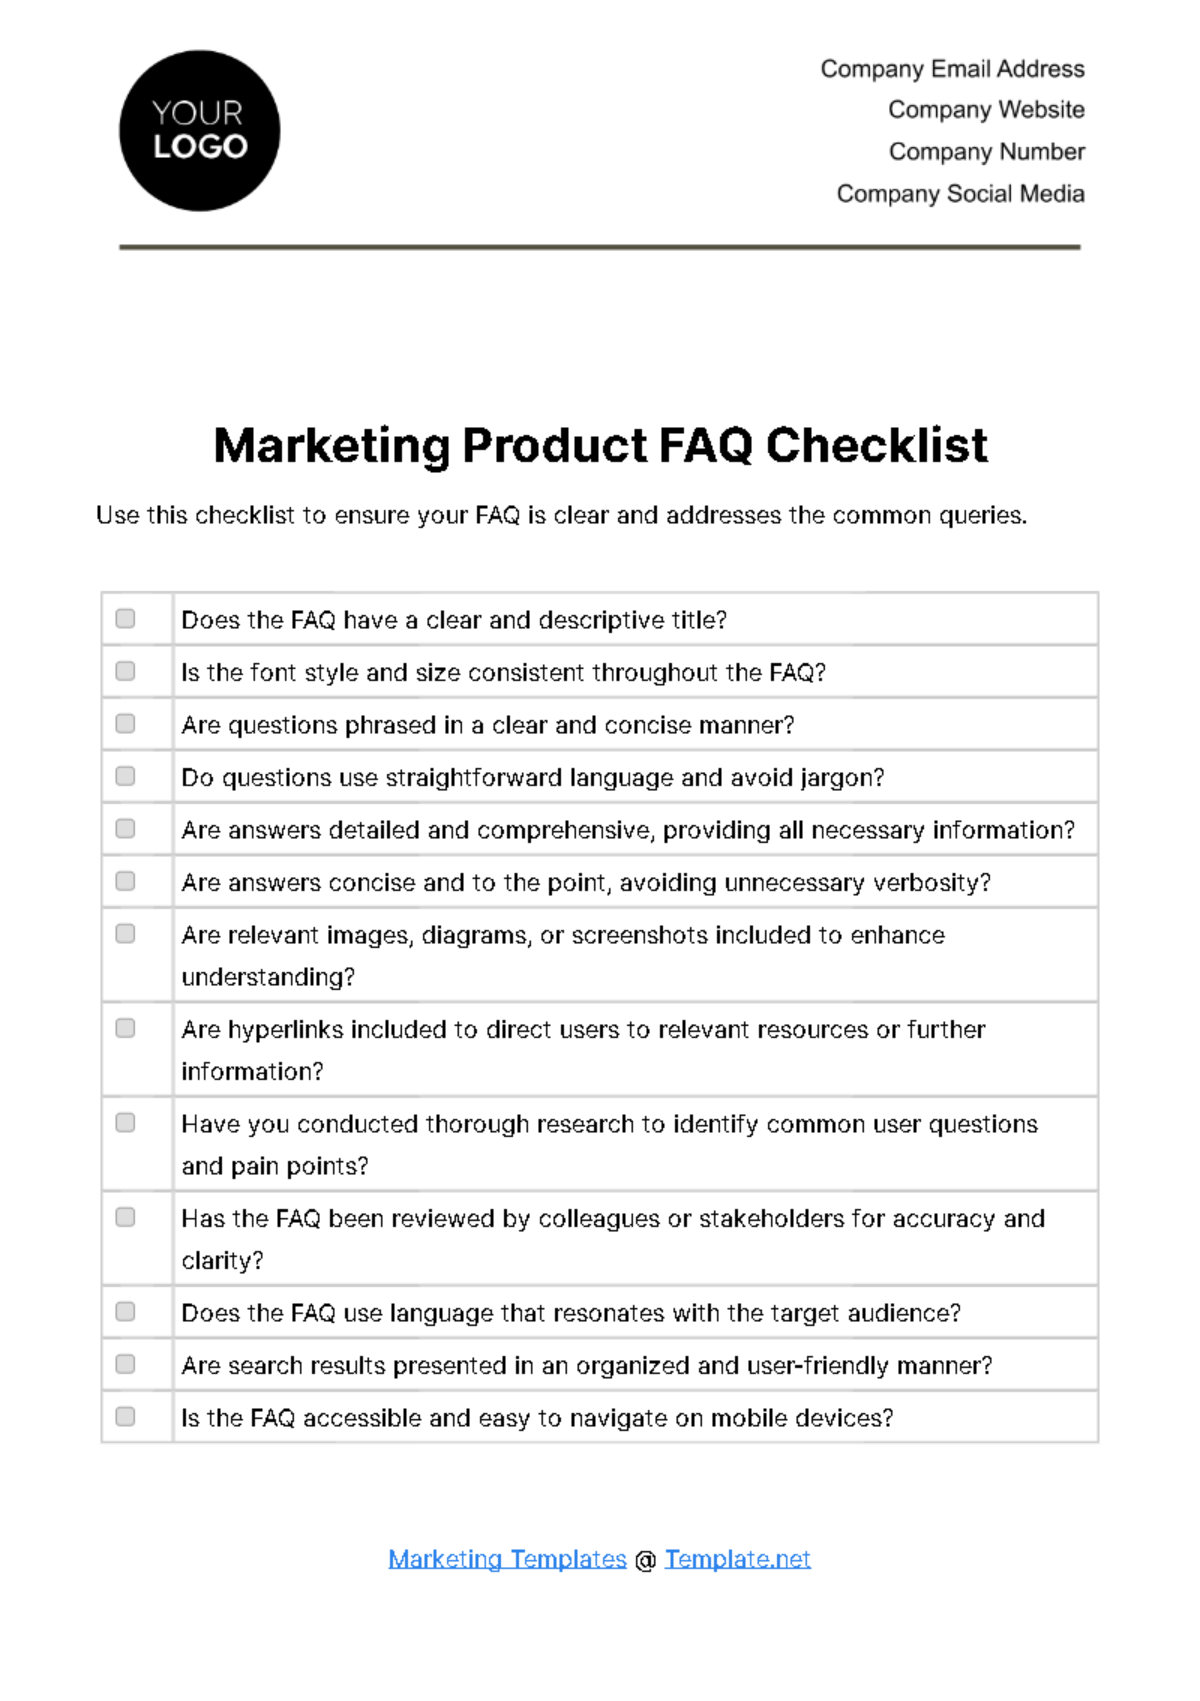 Free Marketing Product FAQ Checklist Template